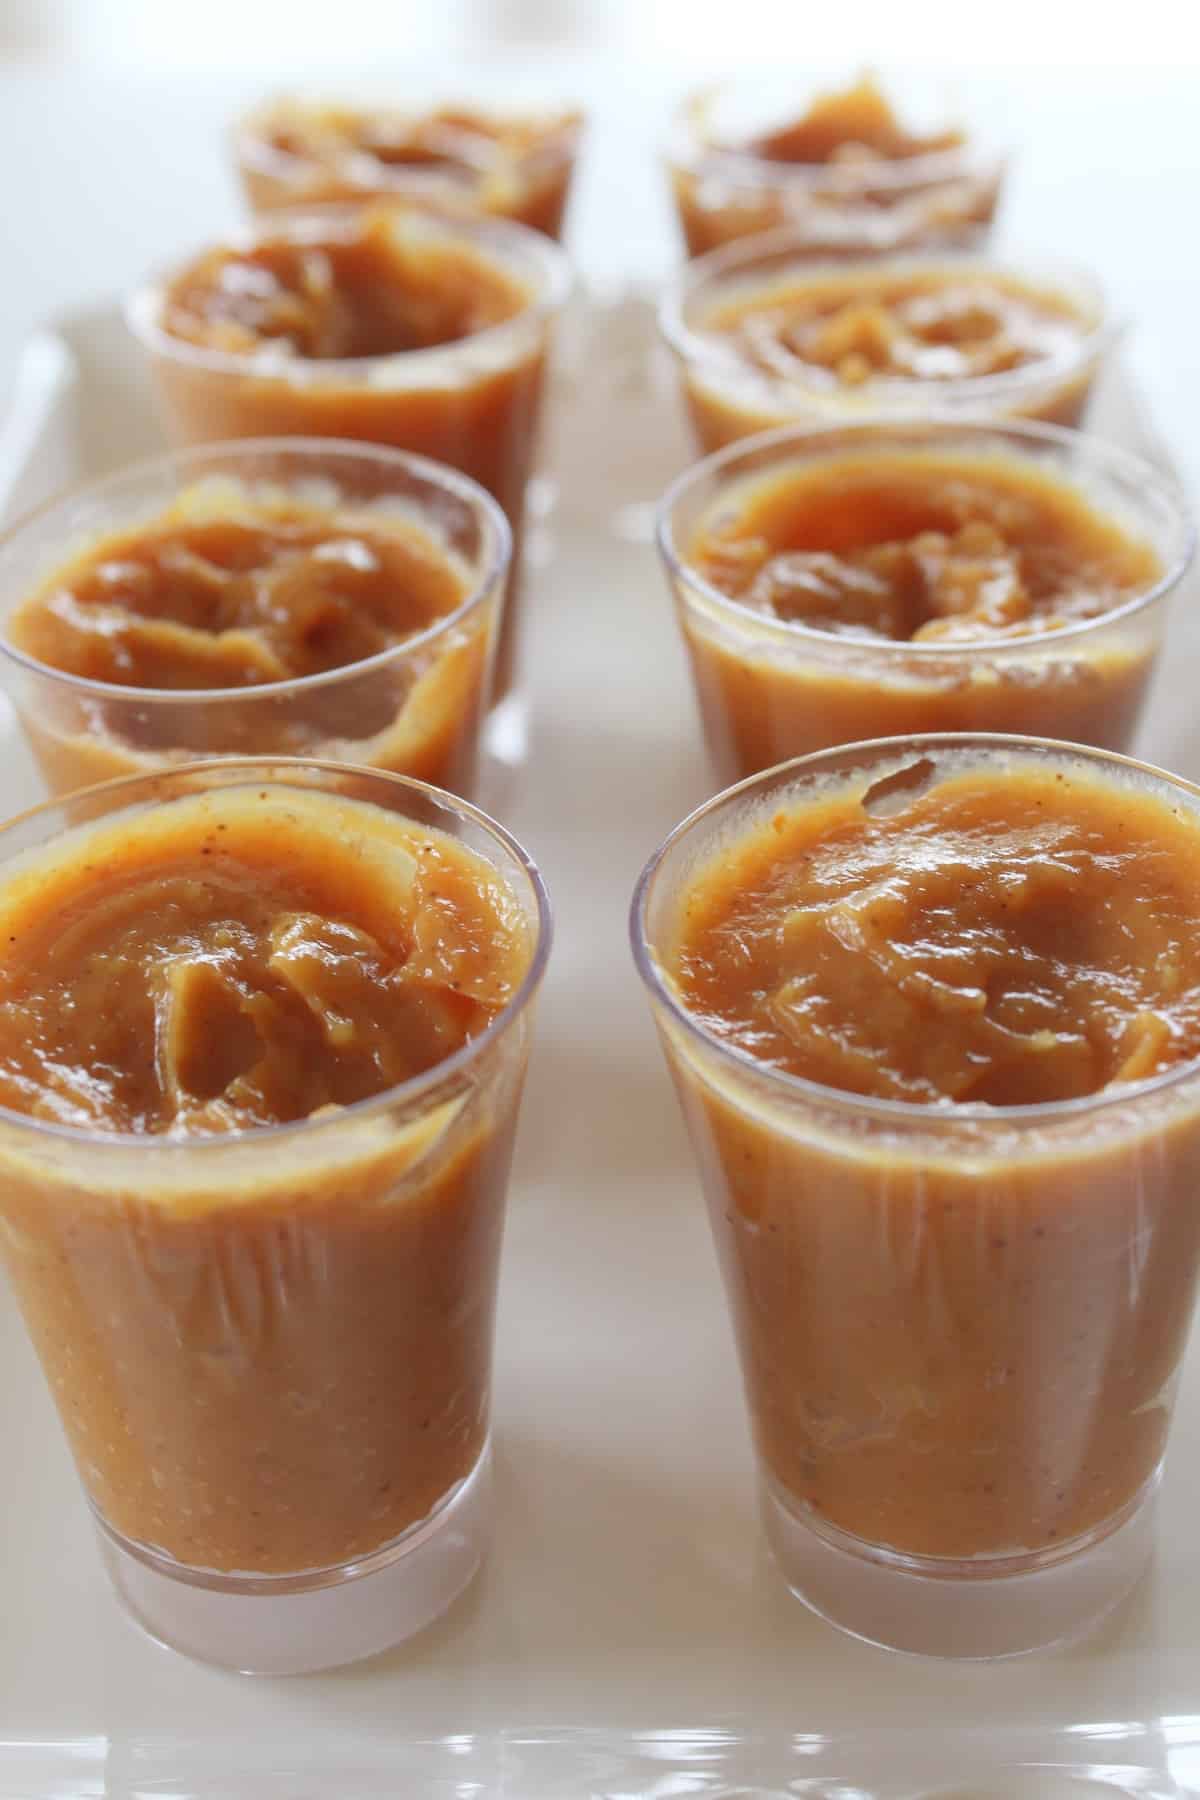 Pumpkin pudding in shot glasses.